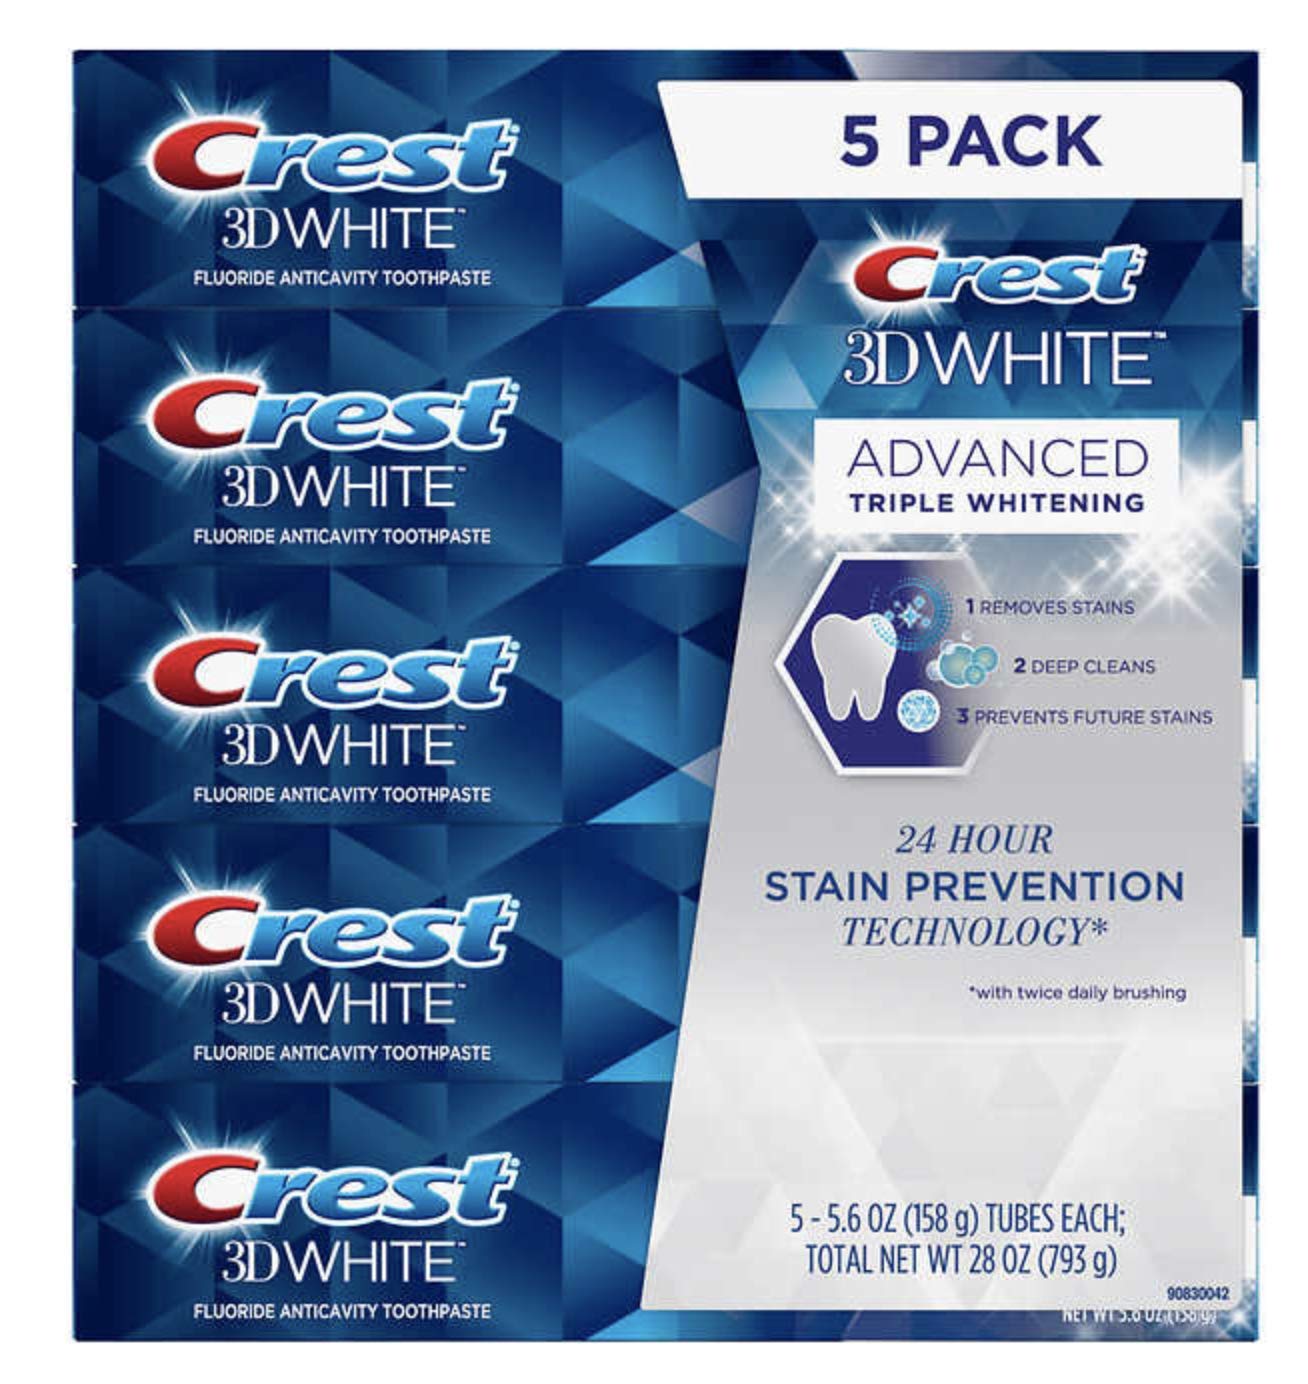 Crest 3D White Advance Whitening Flavoride Anticavity Toothpaste 5 Pack 5.6 Oz Net Wt 28 Oz